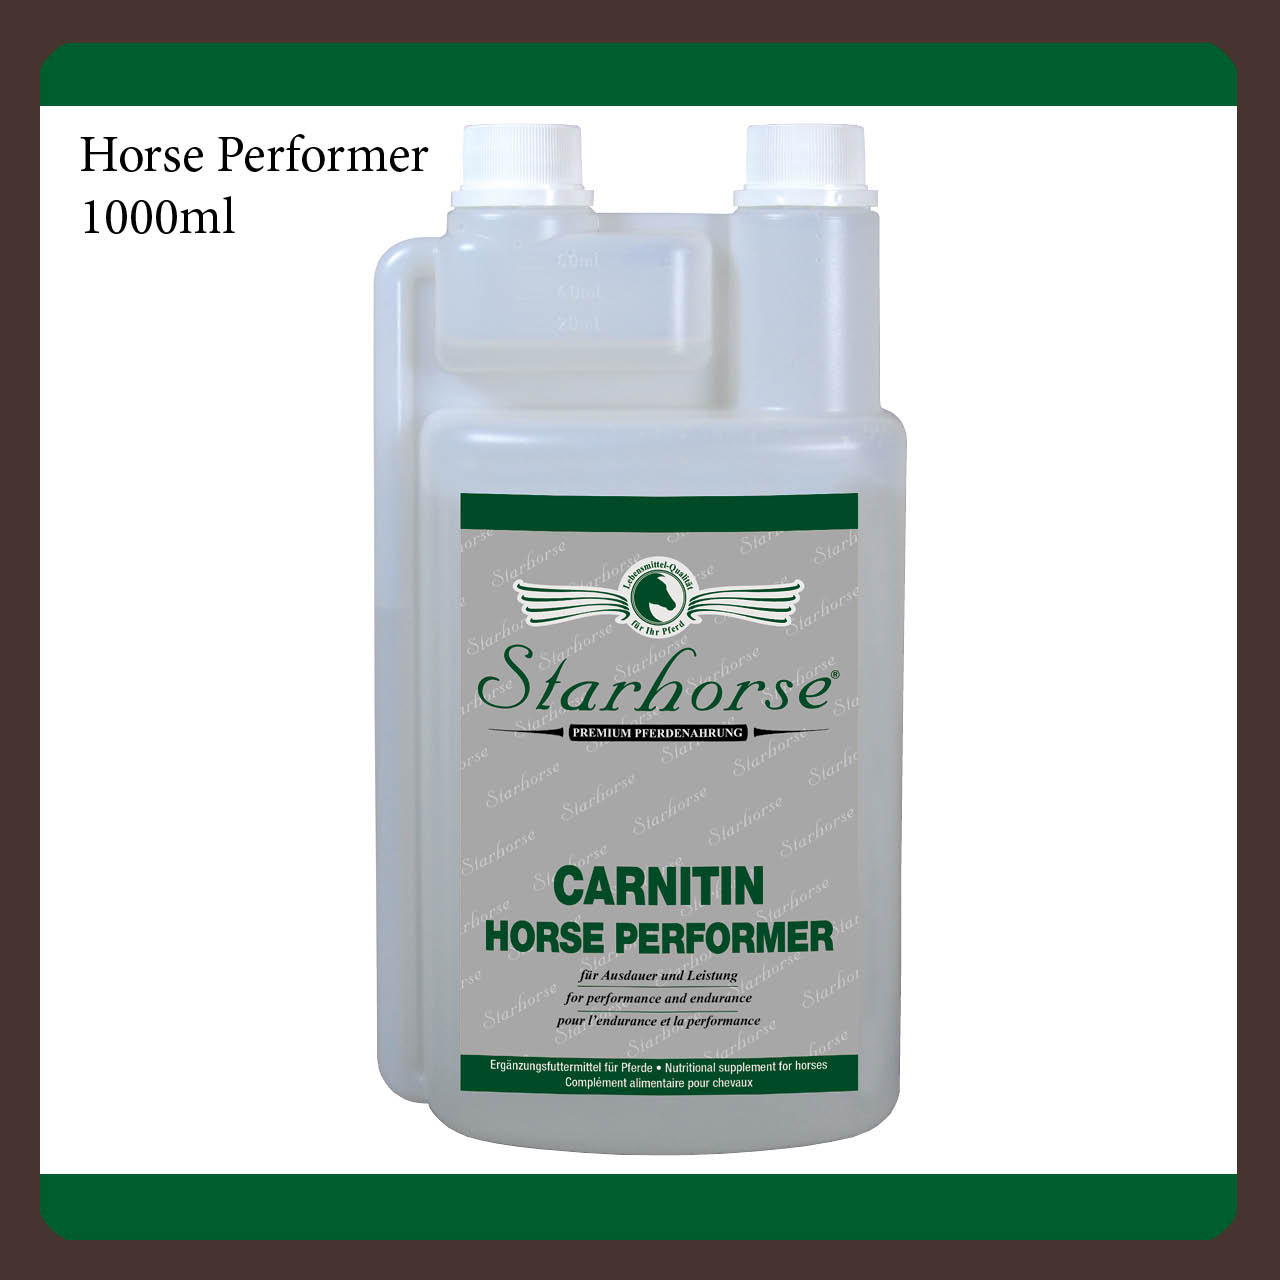 Starhorse Carnitin Horse Performer